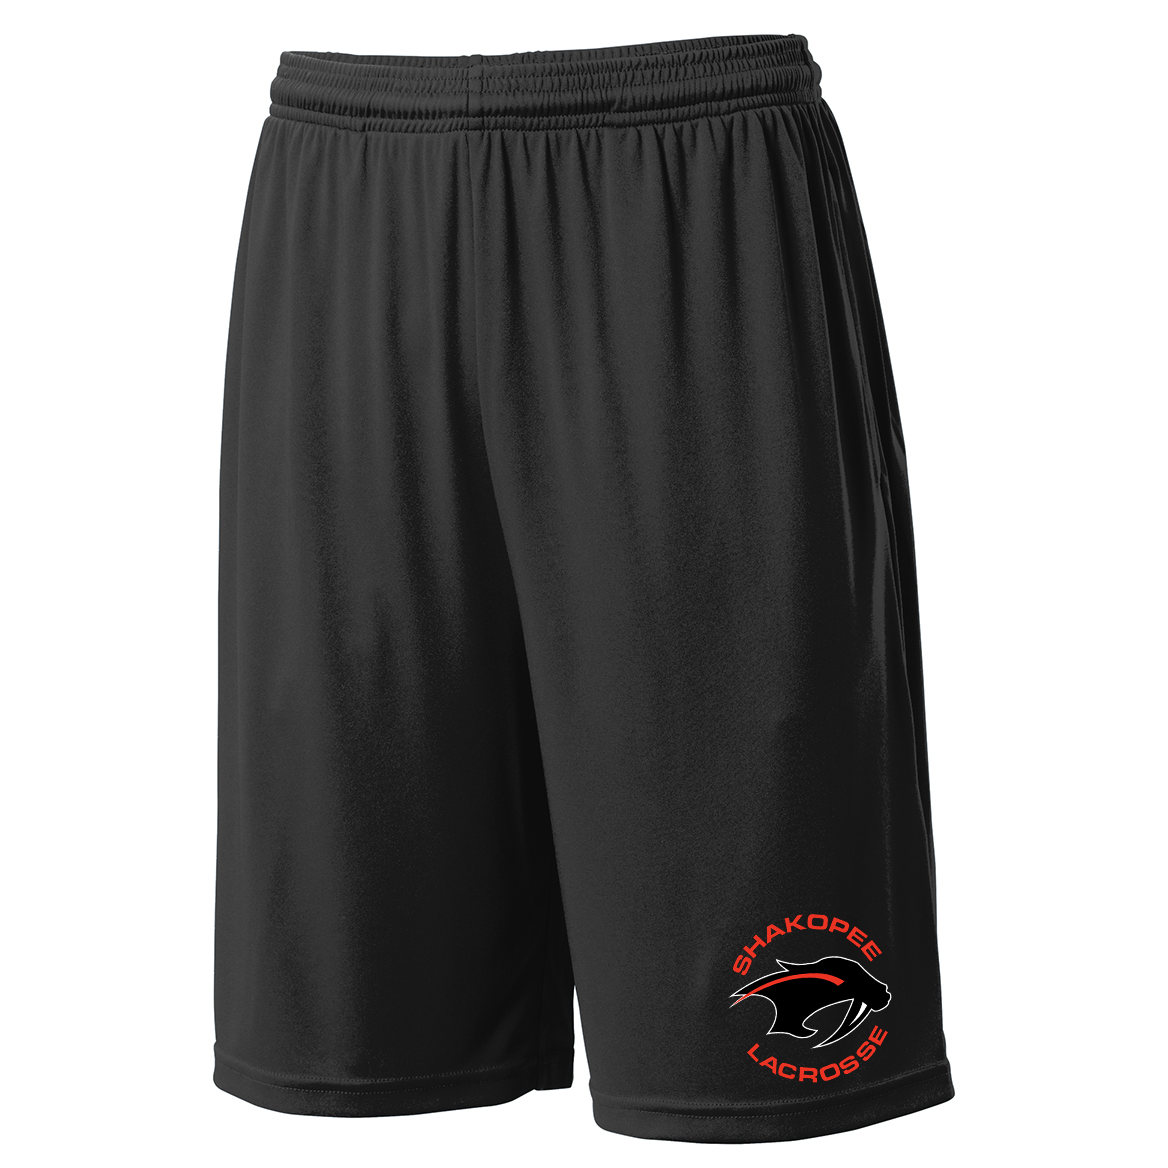 Shakopee Lacrosse Black Shorts